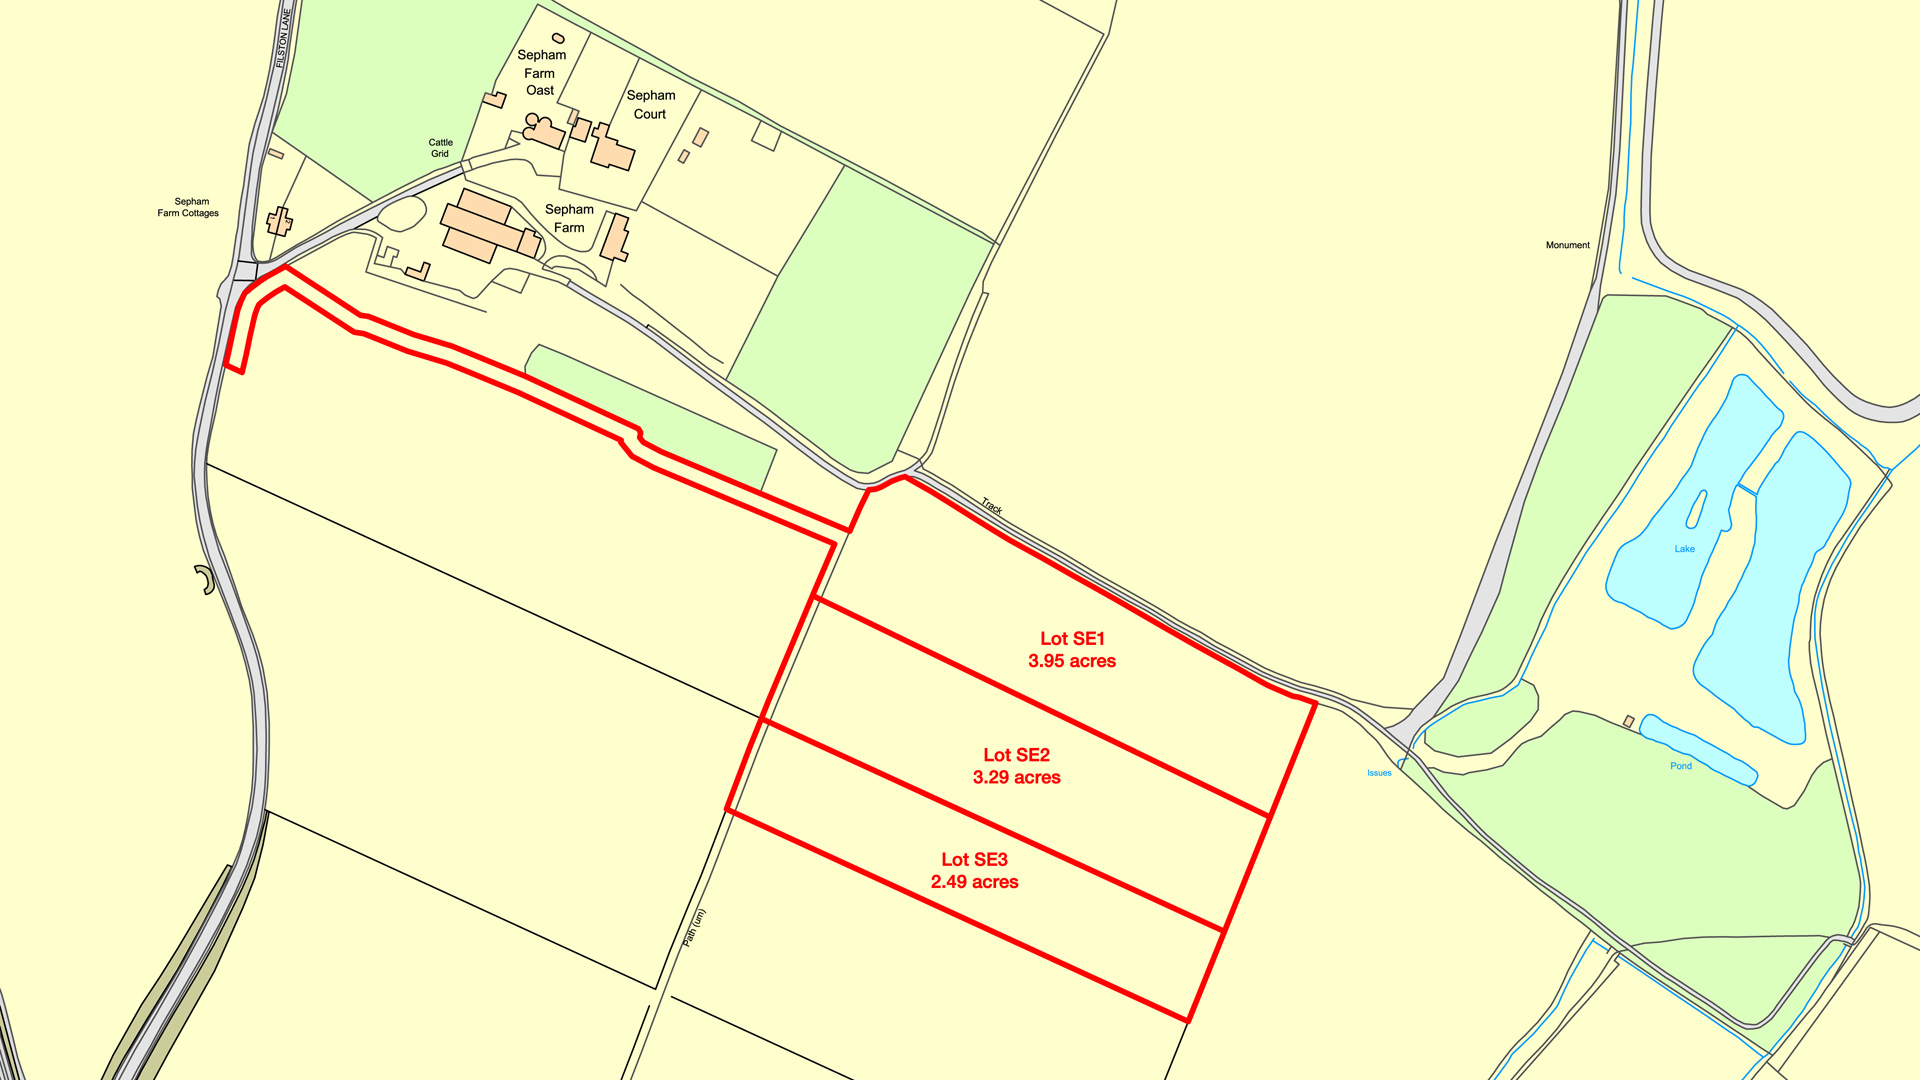 Land for sale in Sevenoaks site plan